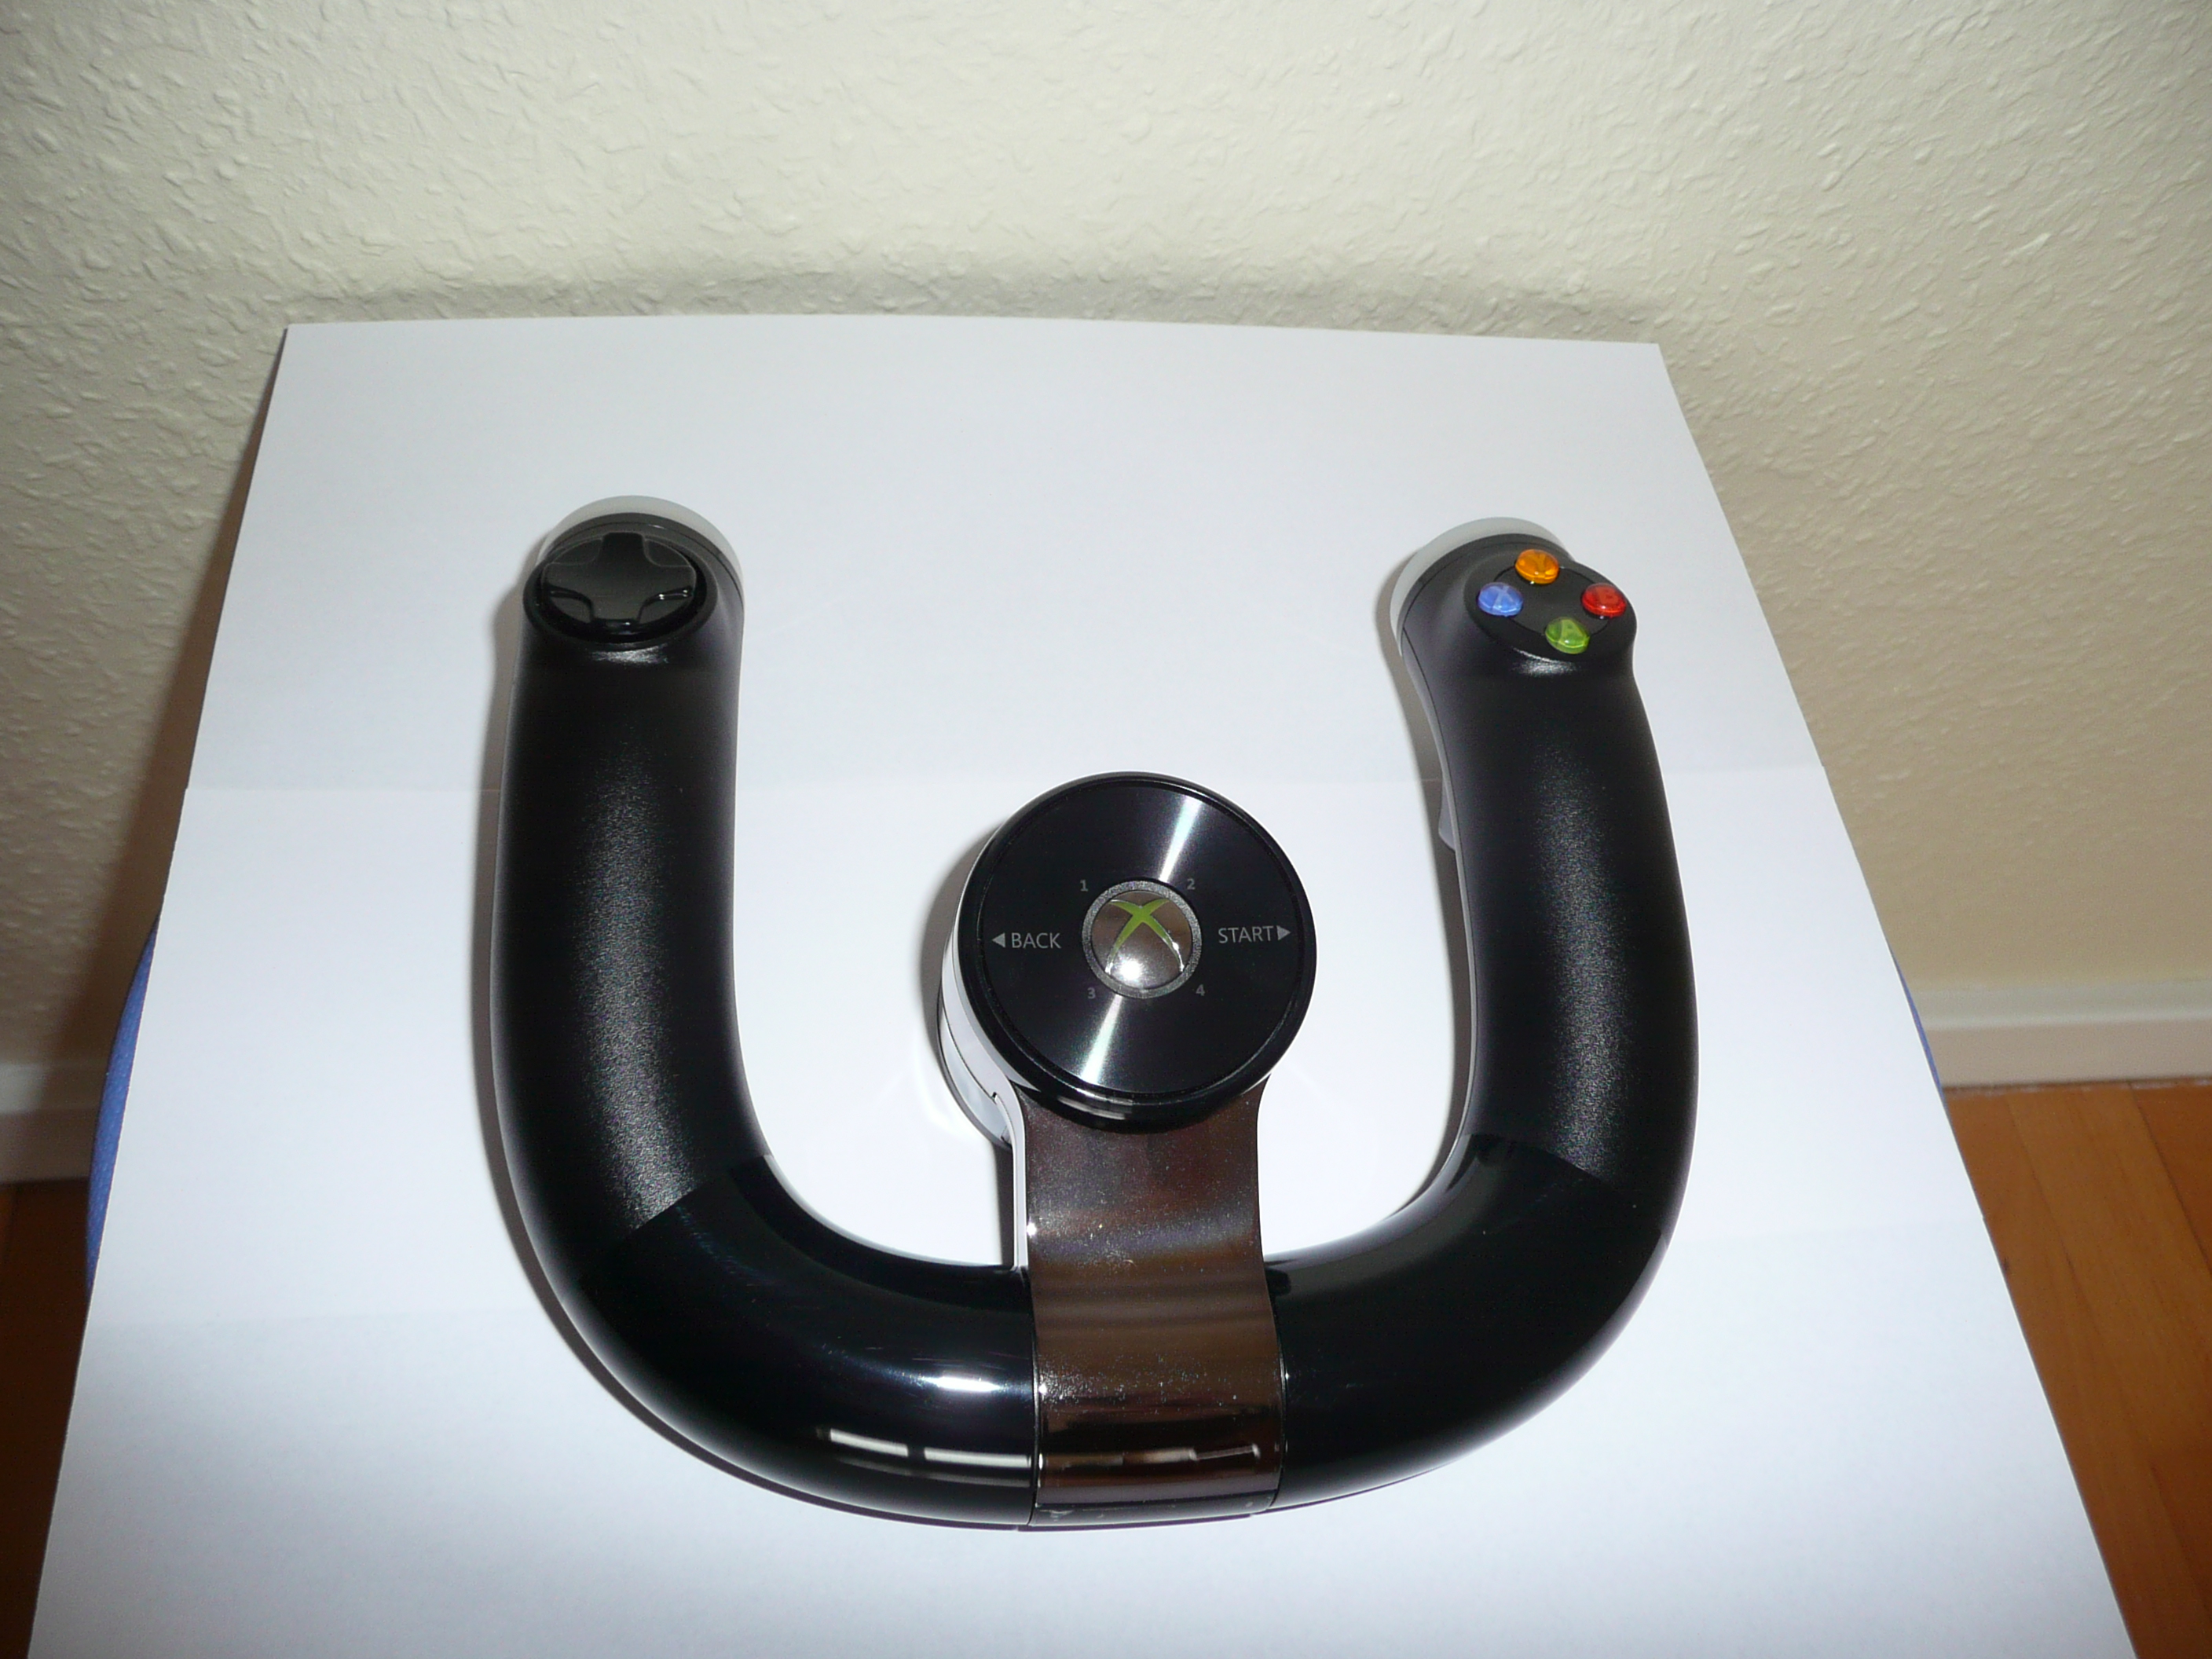 Xbox 360 Wireless Racing Wheel - Wikipedia